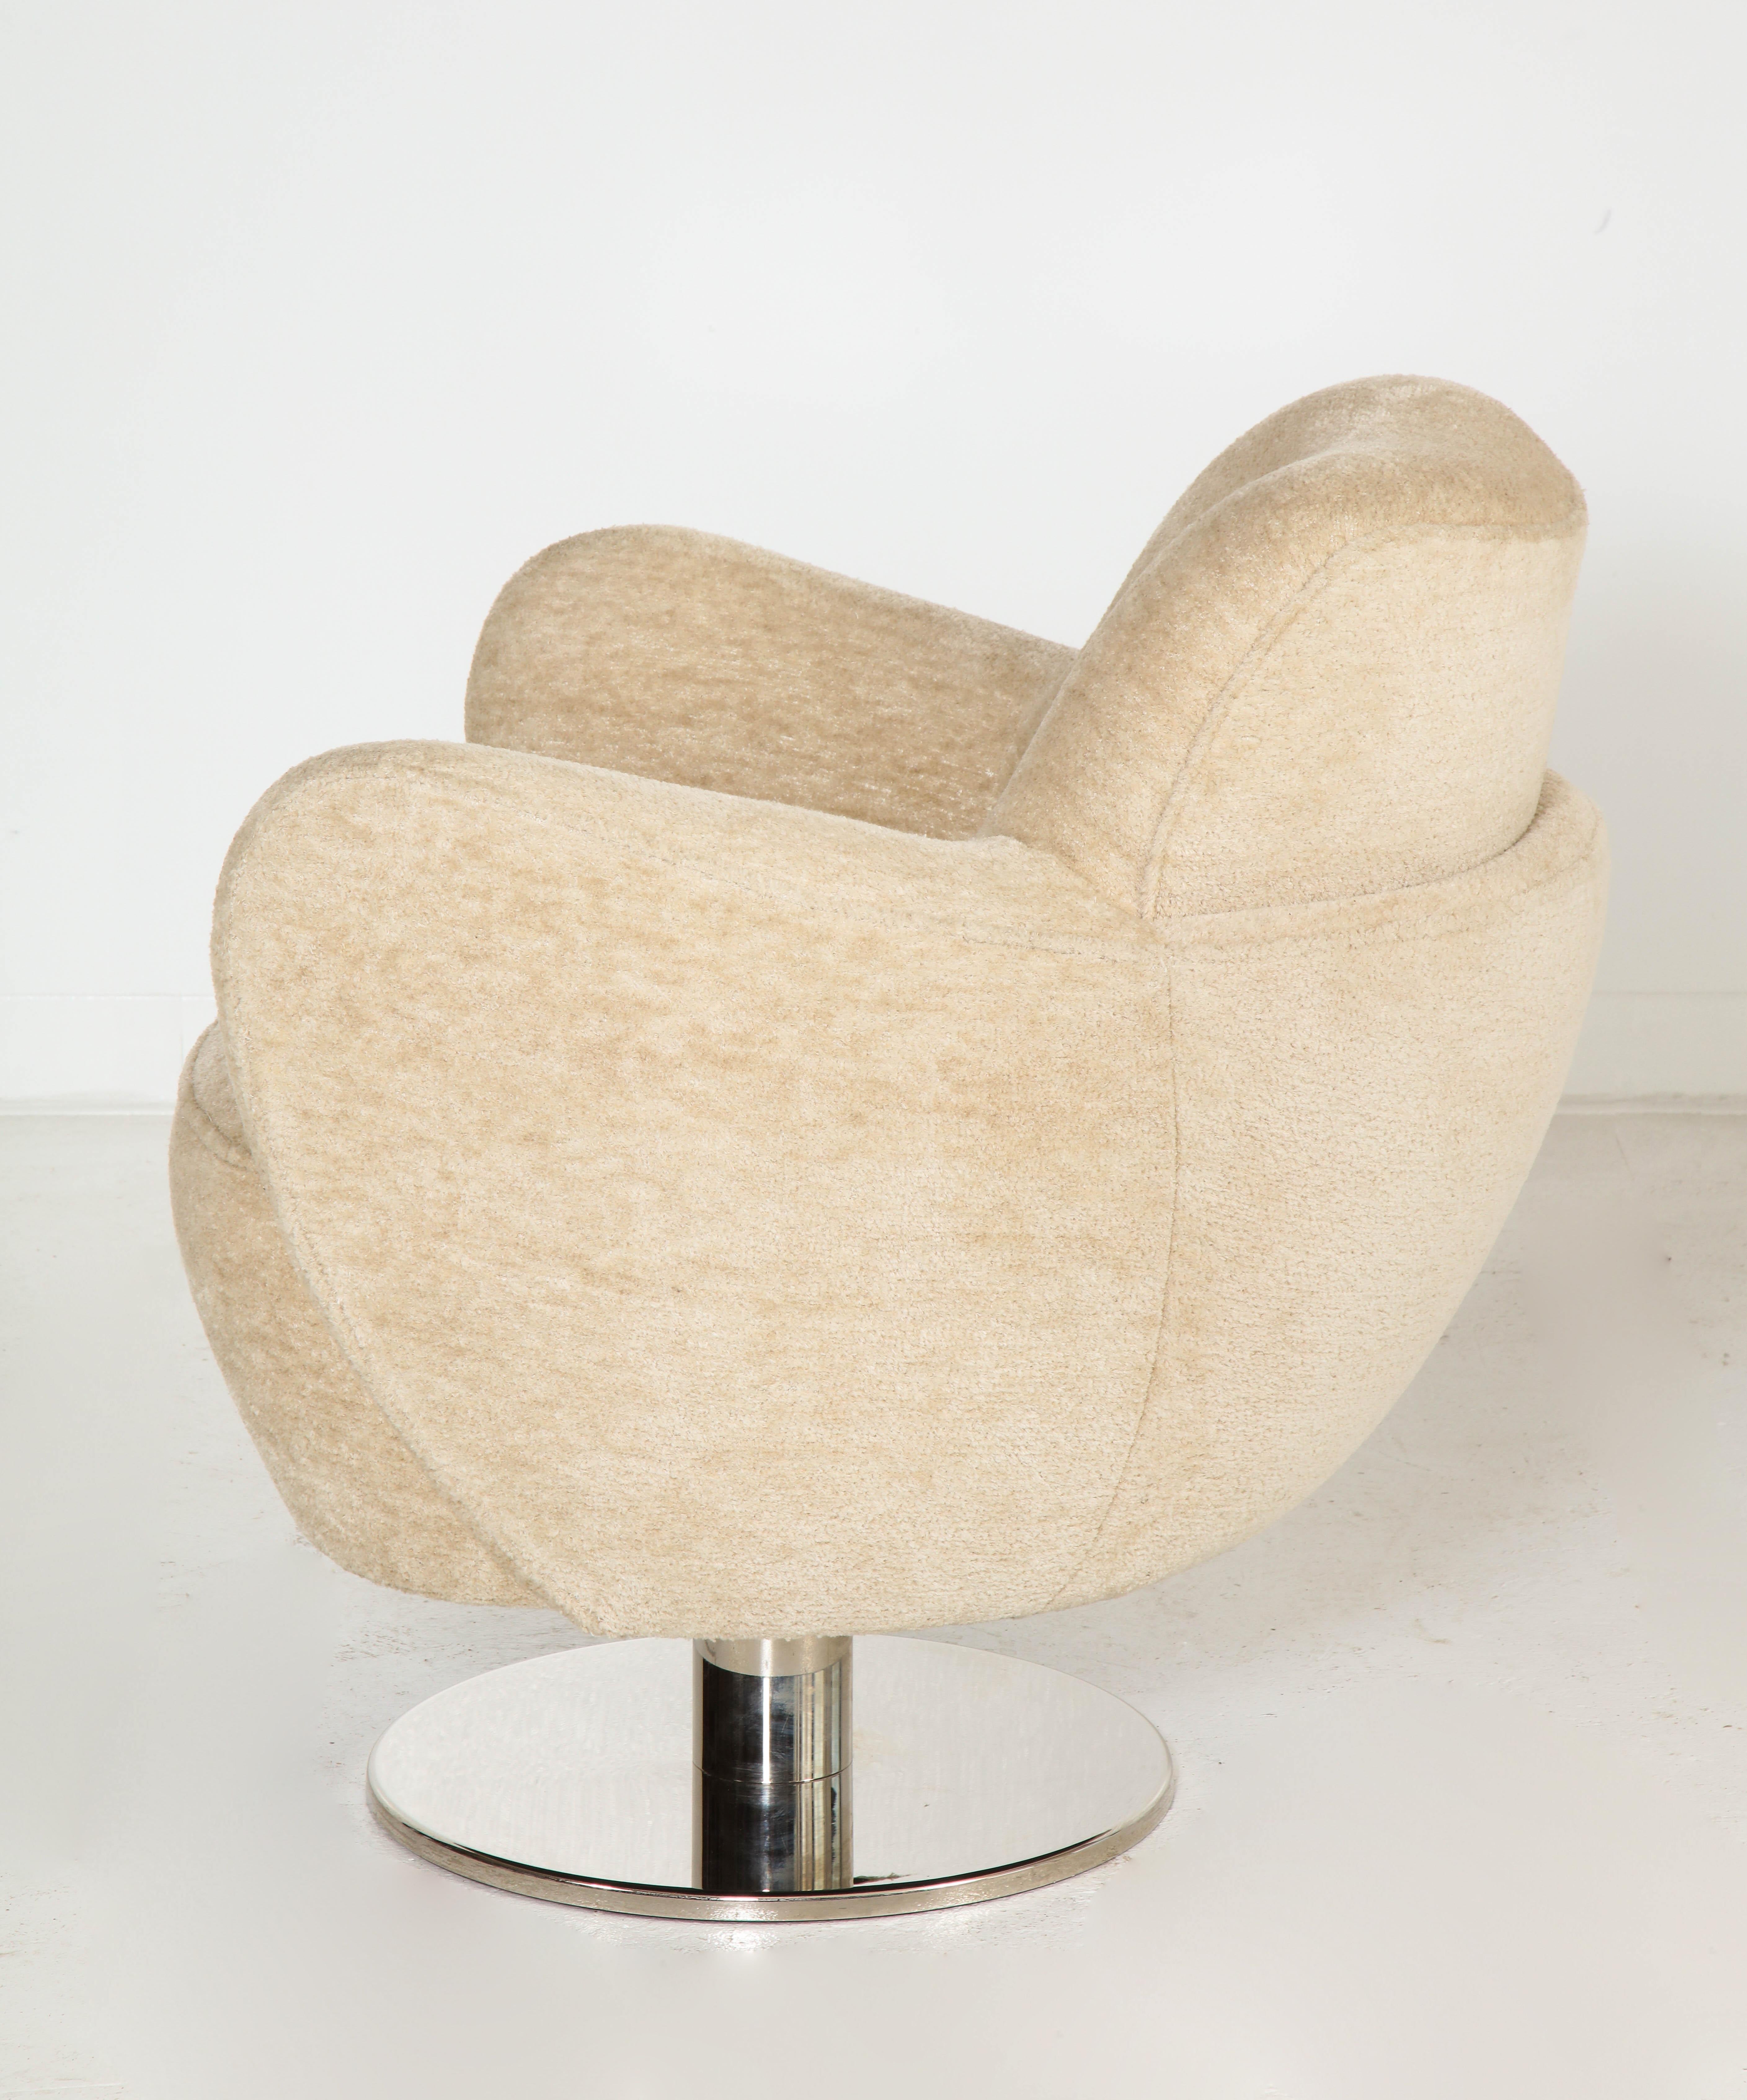 Brass Wrap Around Swivel Barrel Chair Offered by Vladimir Kagan Design Group